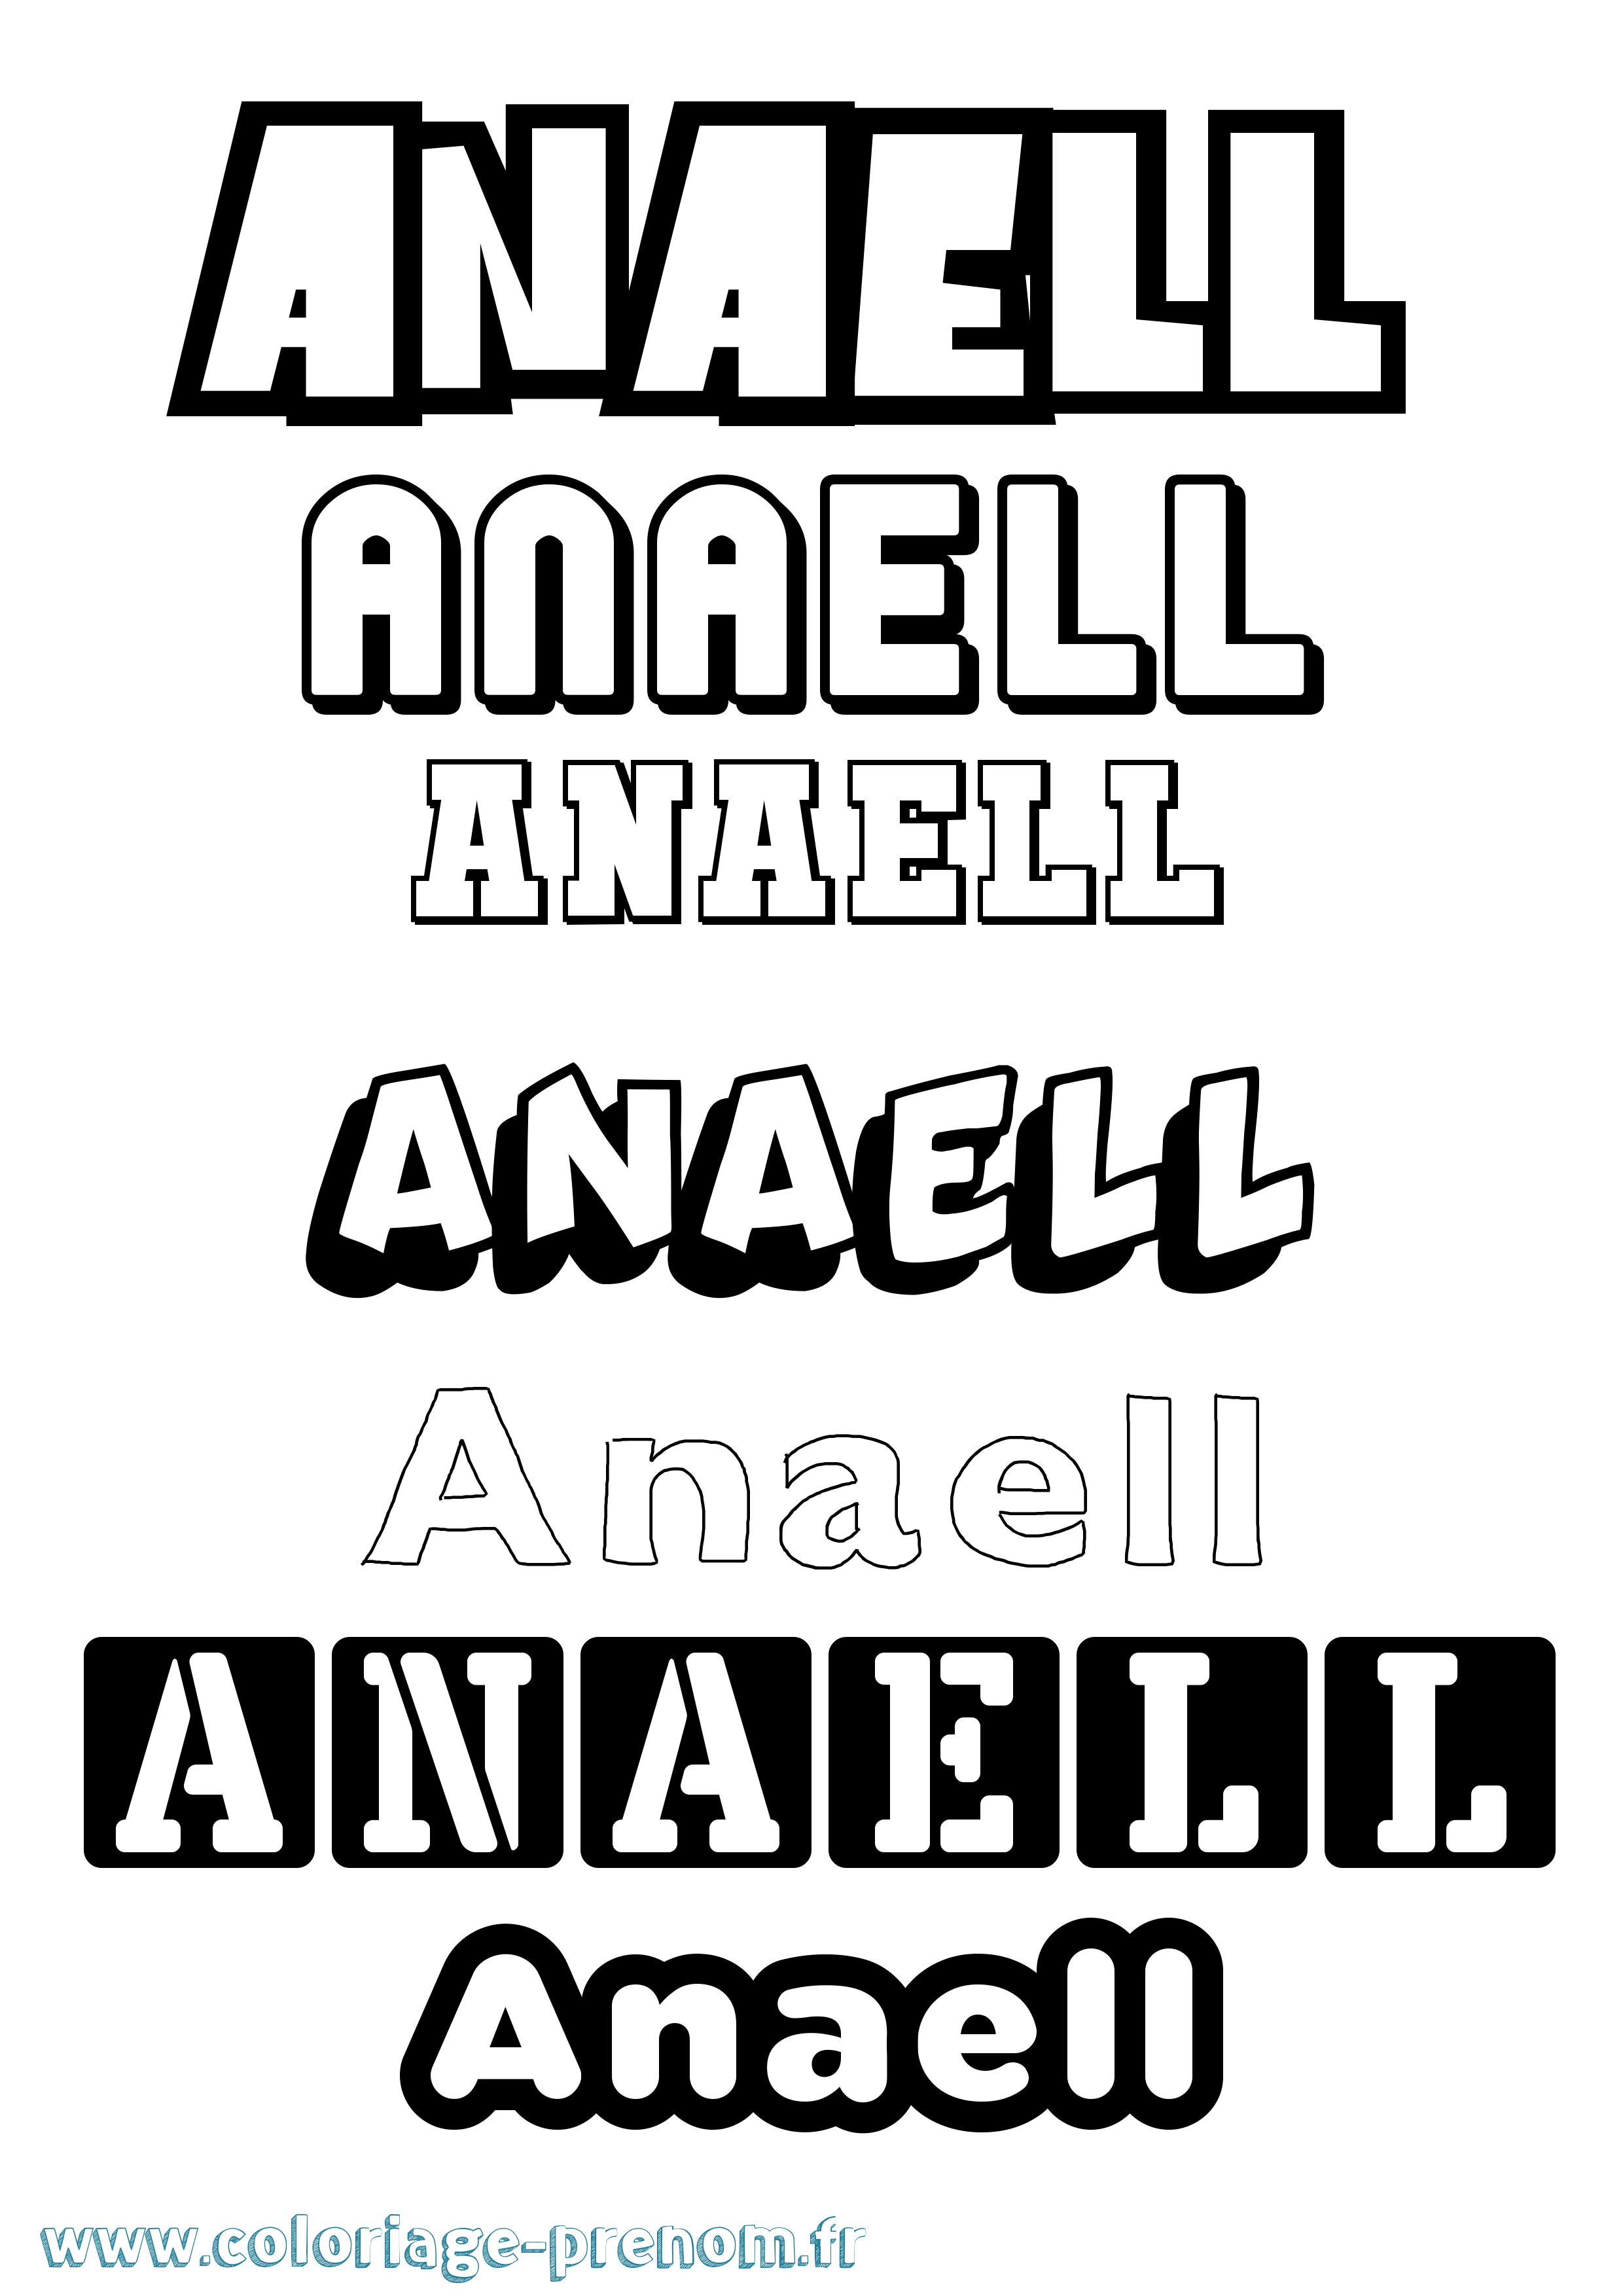 Coloriage prénom Anaell Simple